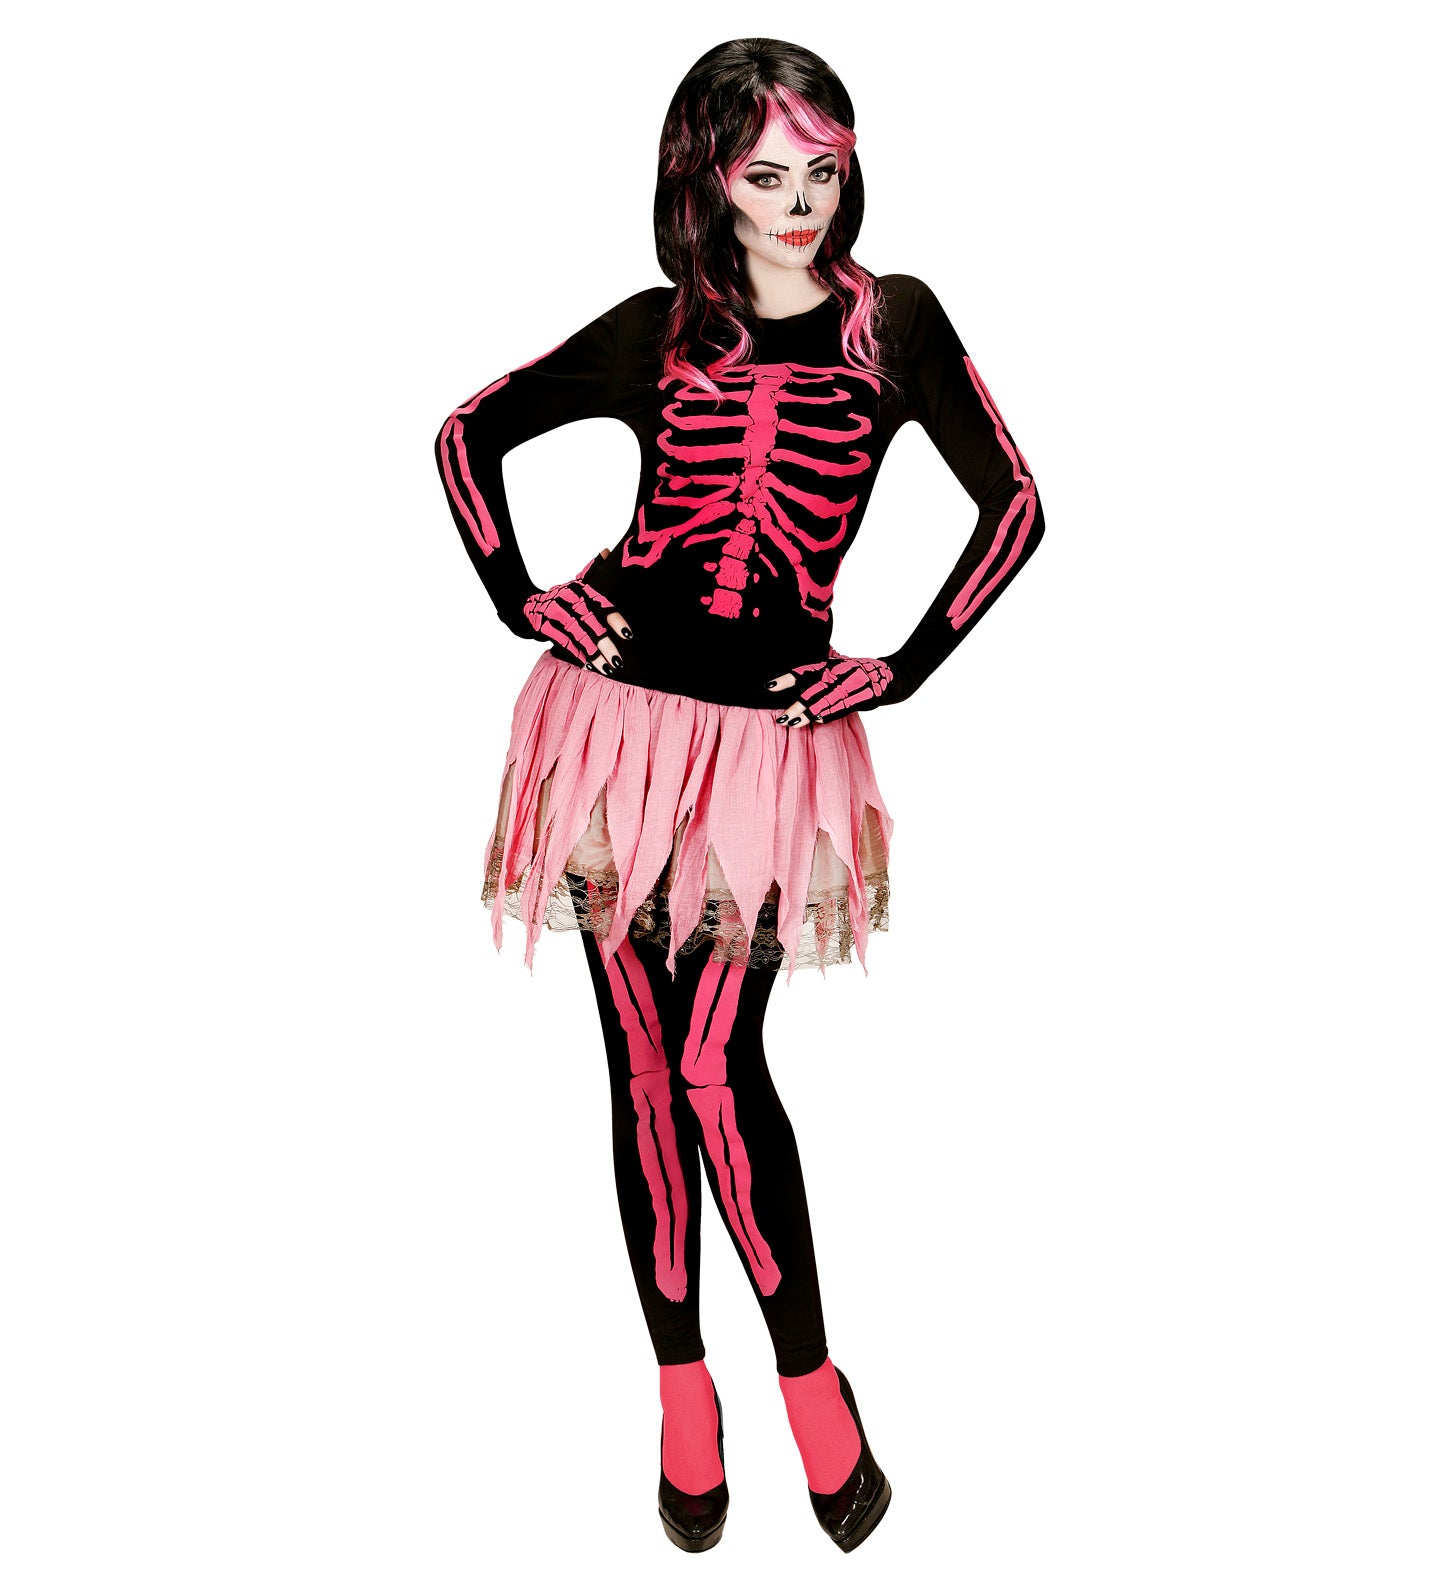 Neon Pink Skeleton outfit Ladies